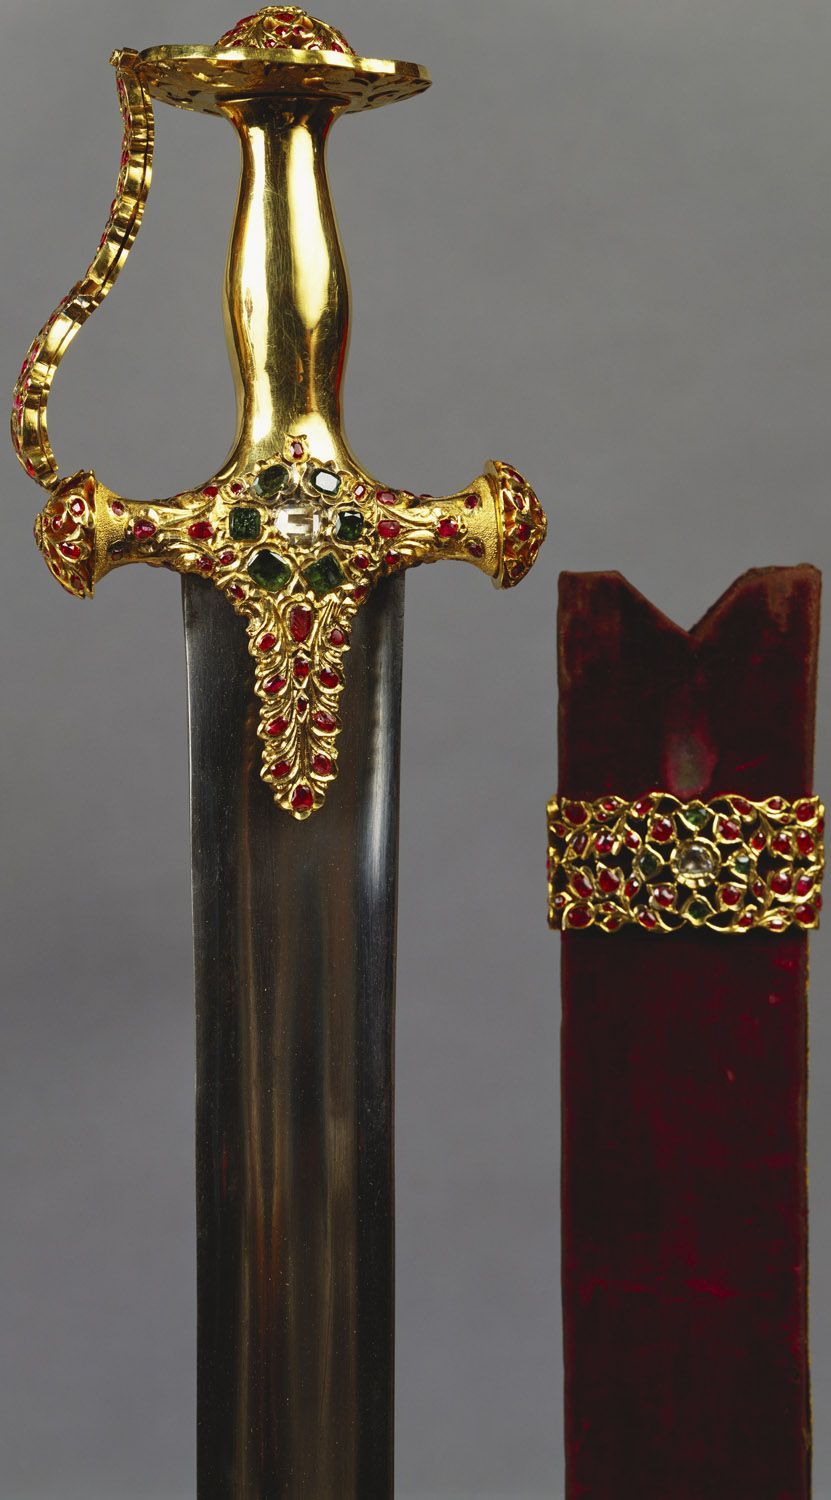 Indian and scabbard. Sword design, Sword, Indian sword